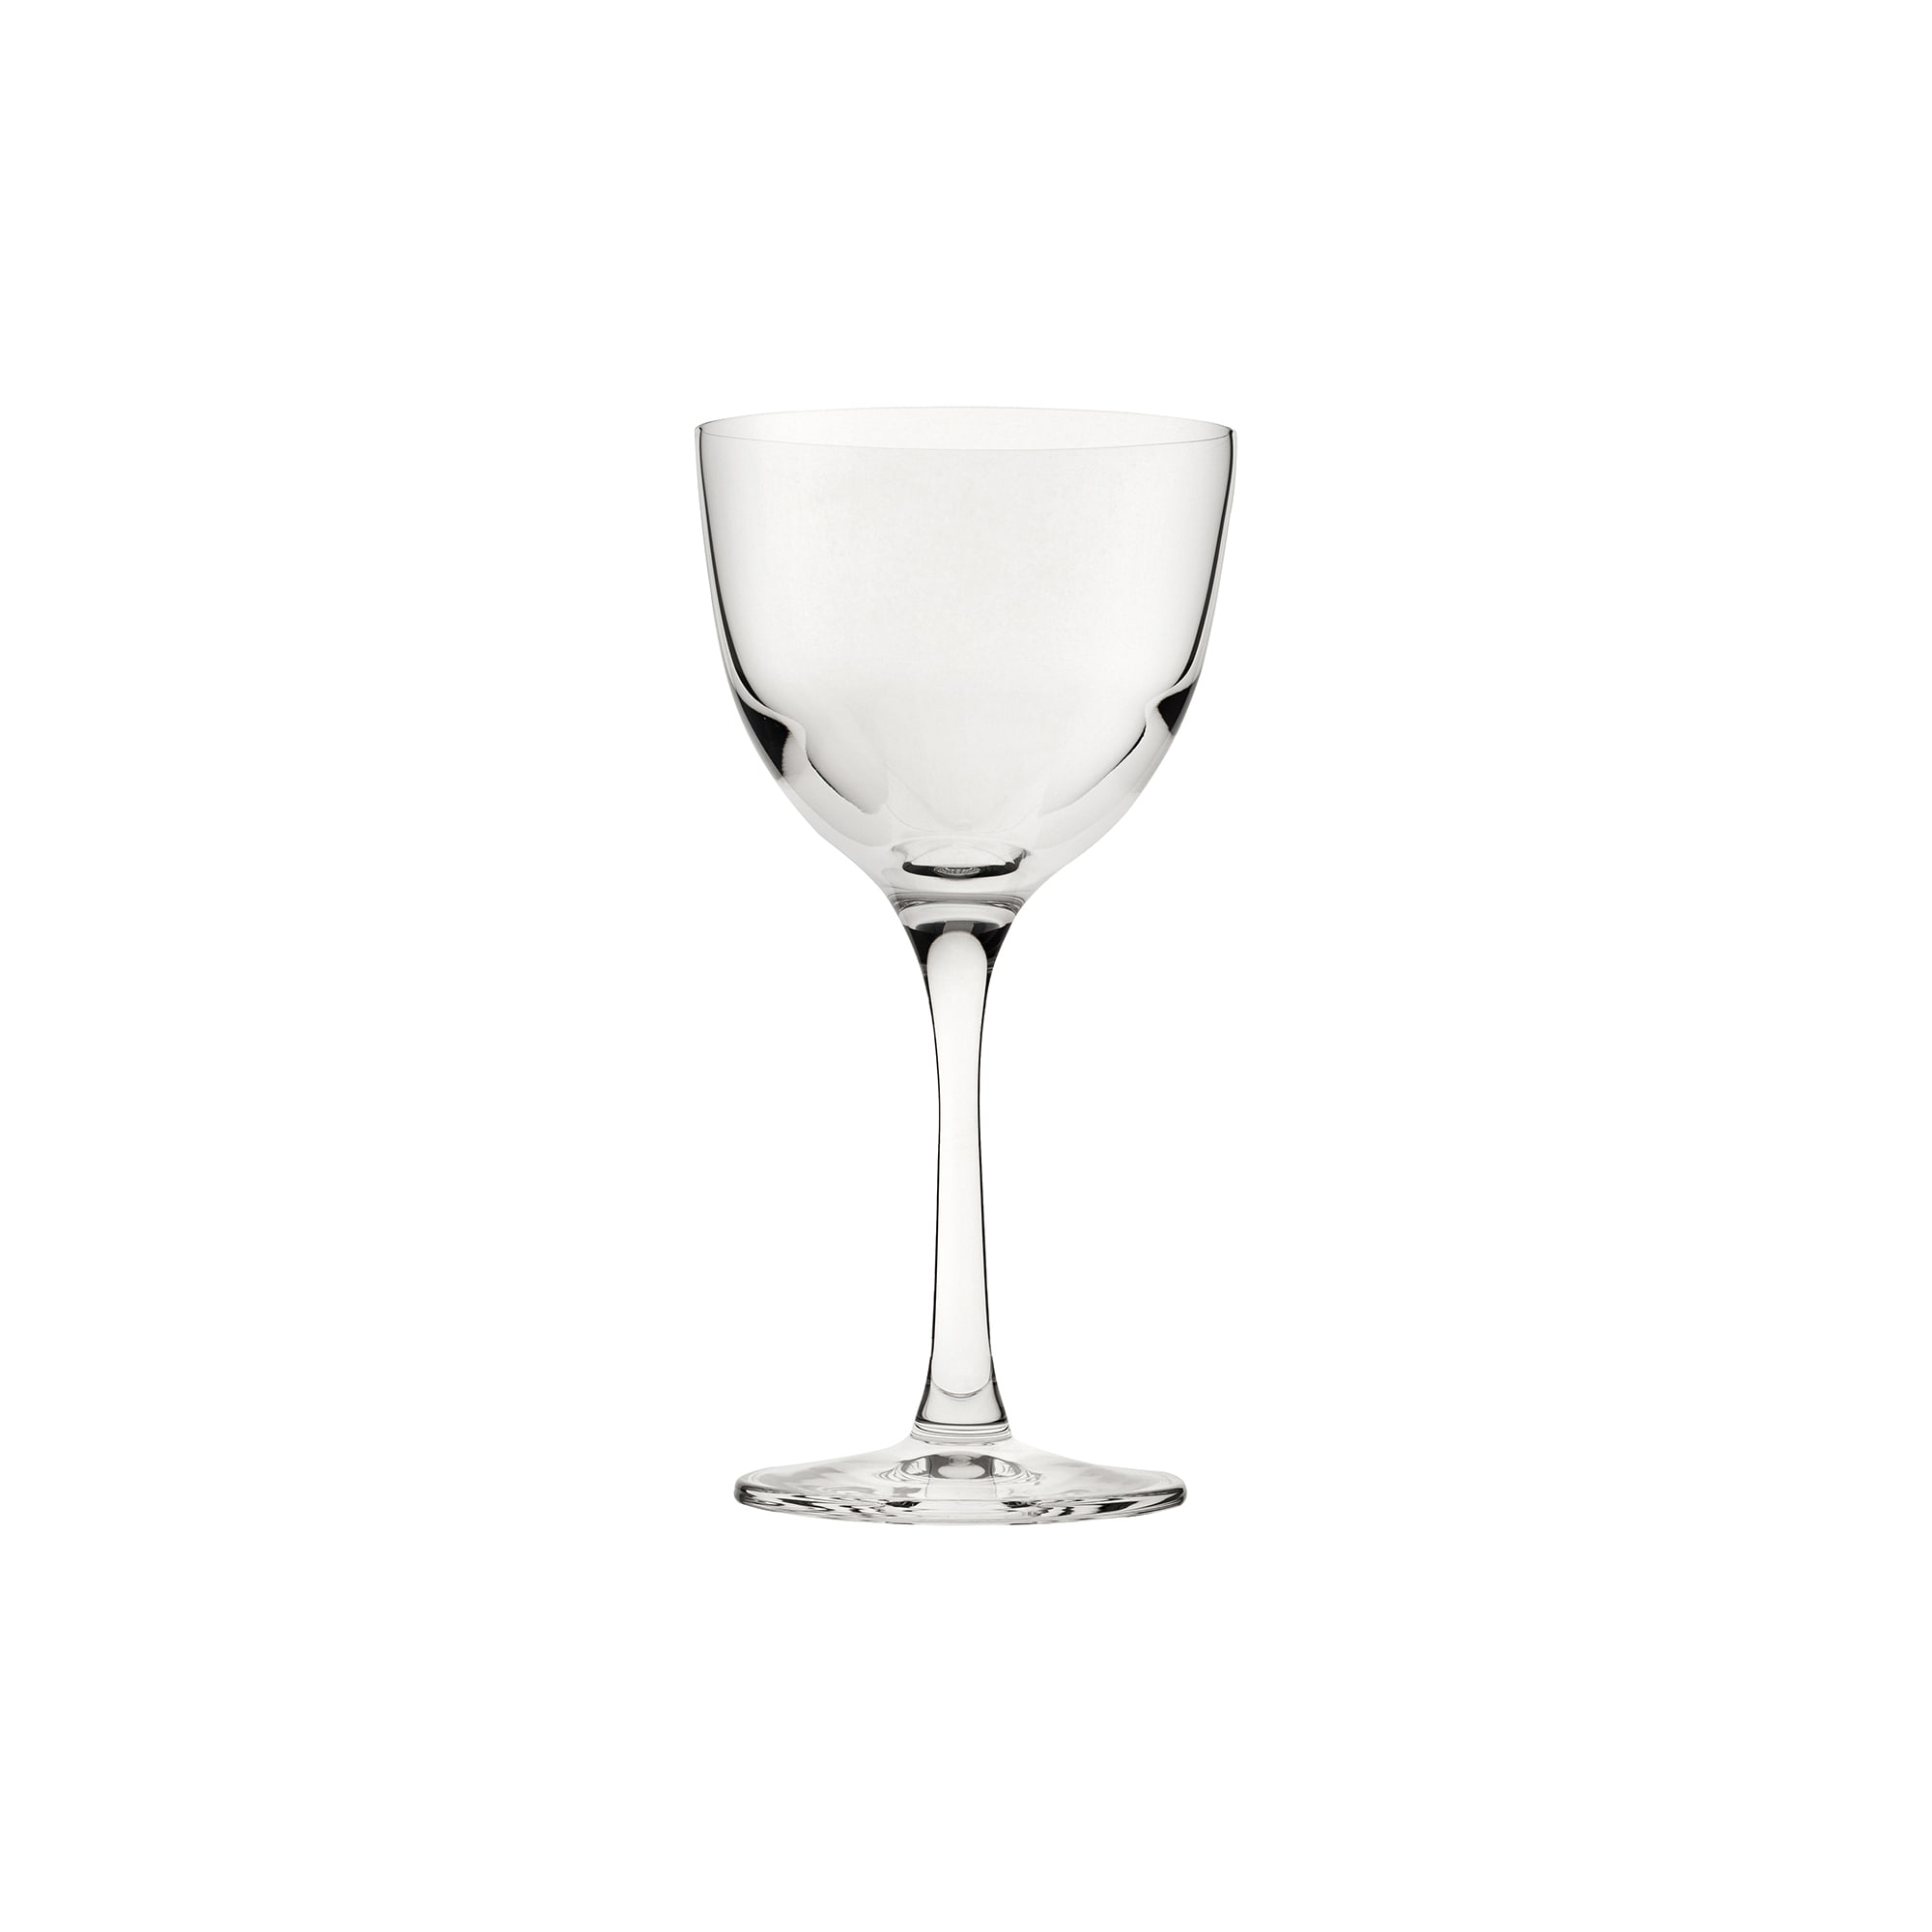 RONA Drink master 12 oz. Stemless Martini Glass & Reviews